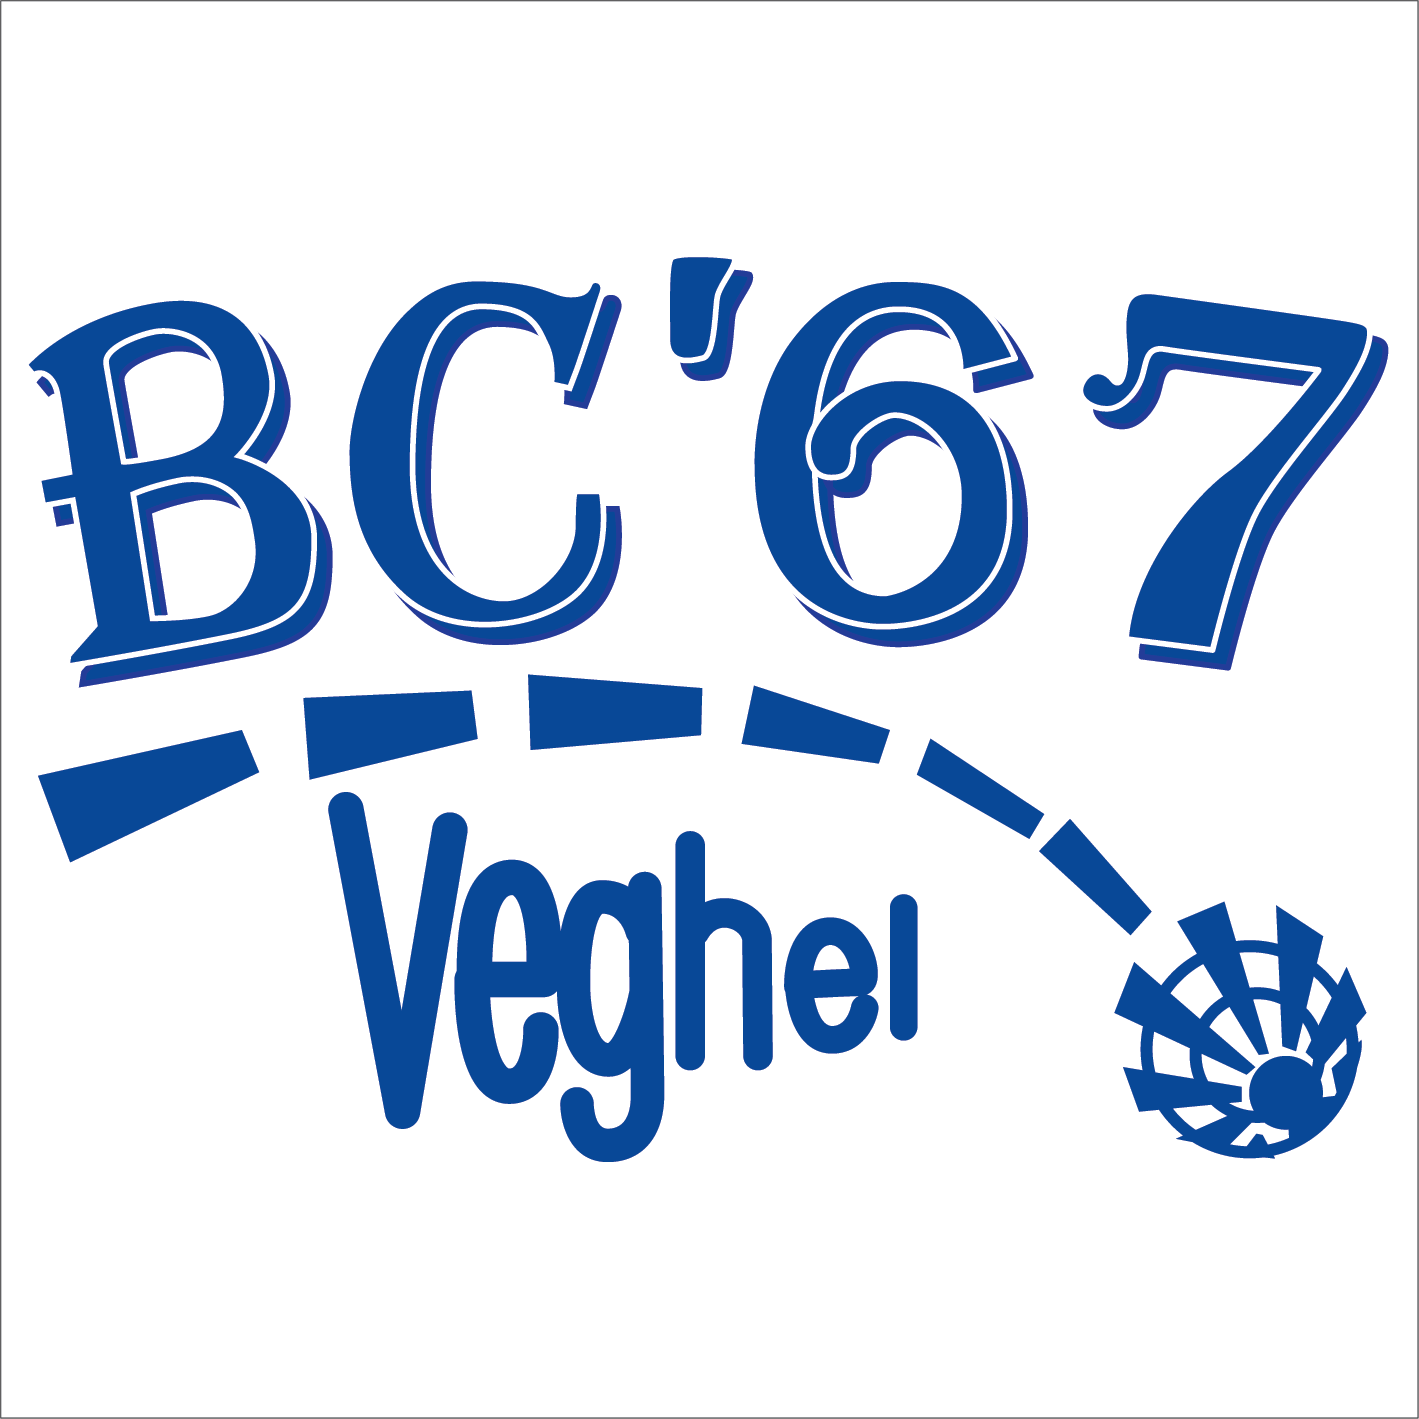 BC'67 Veghel